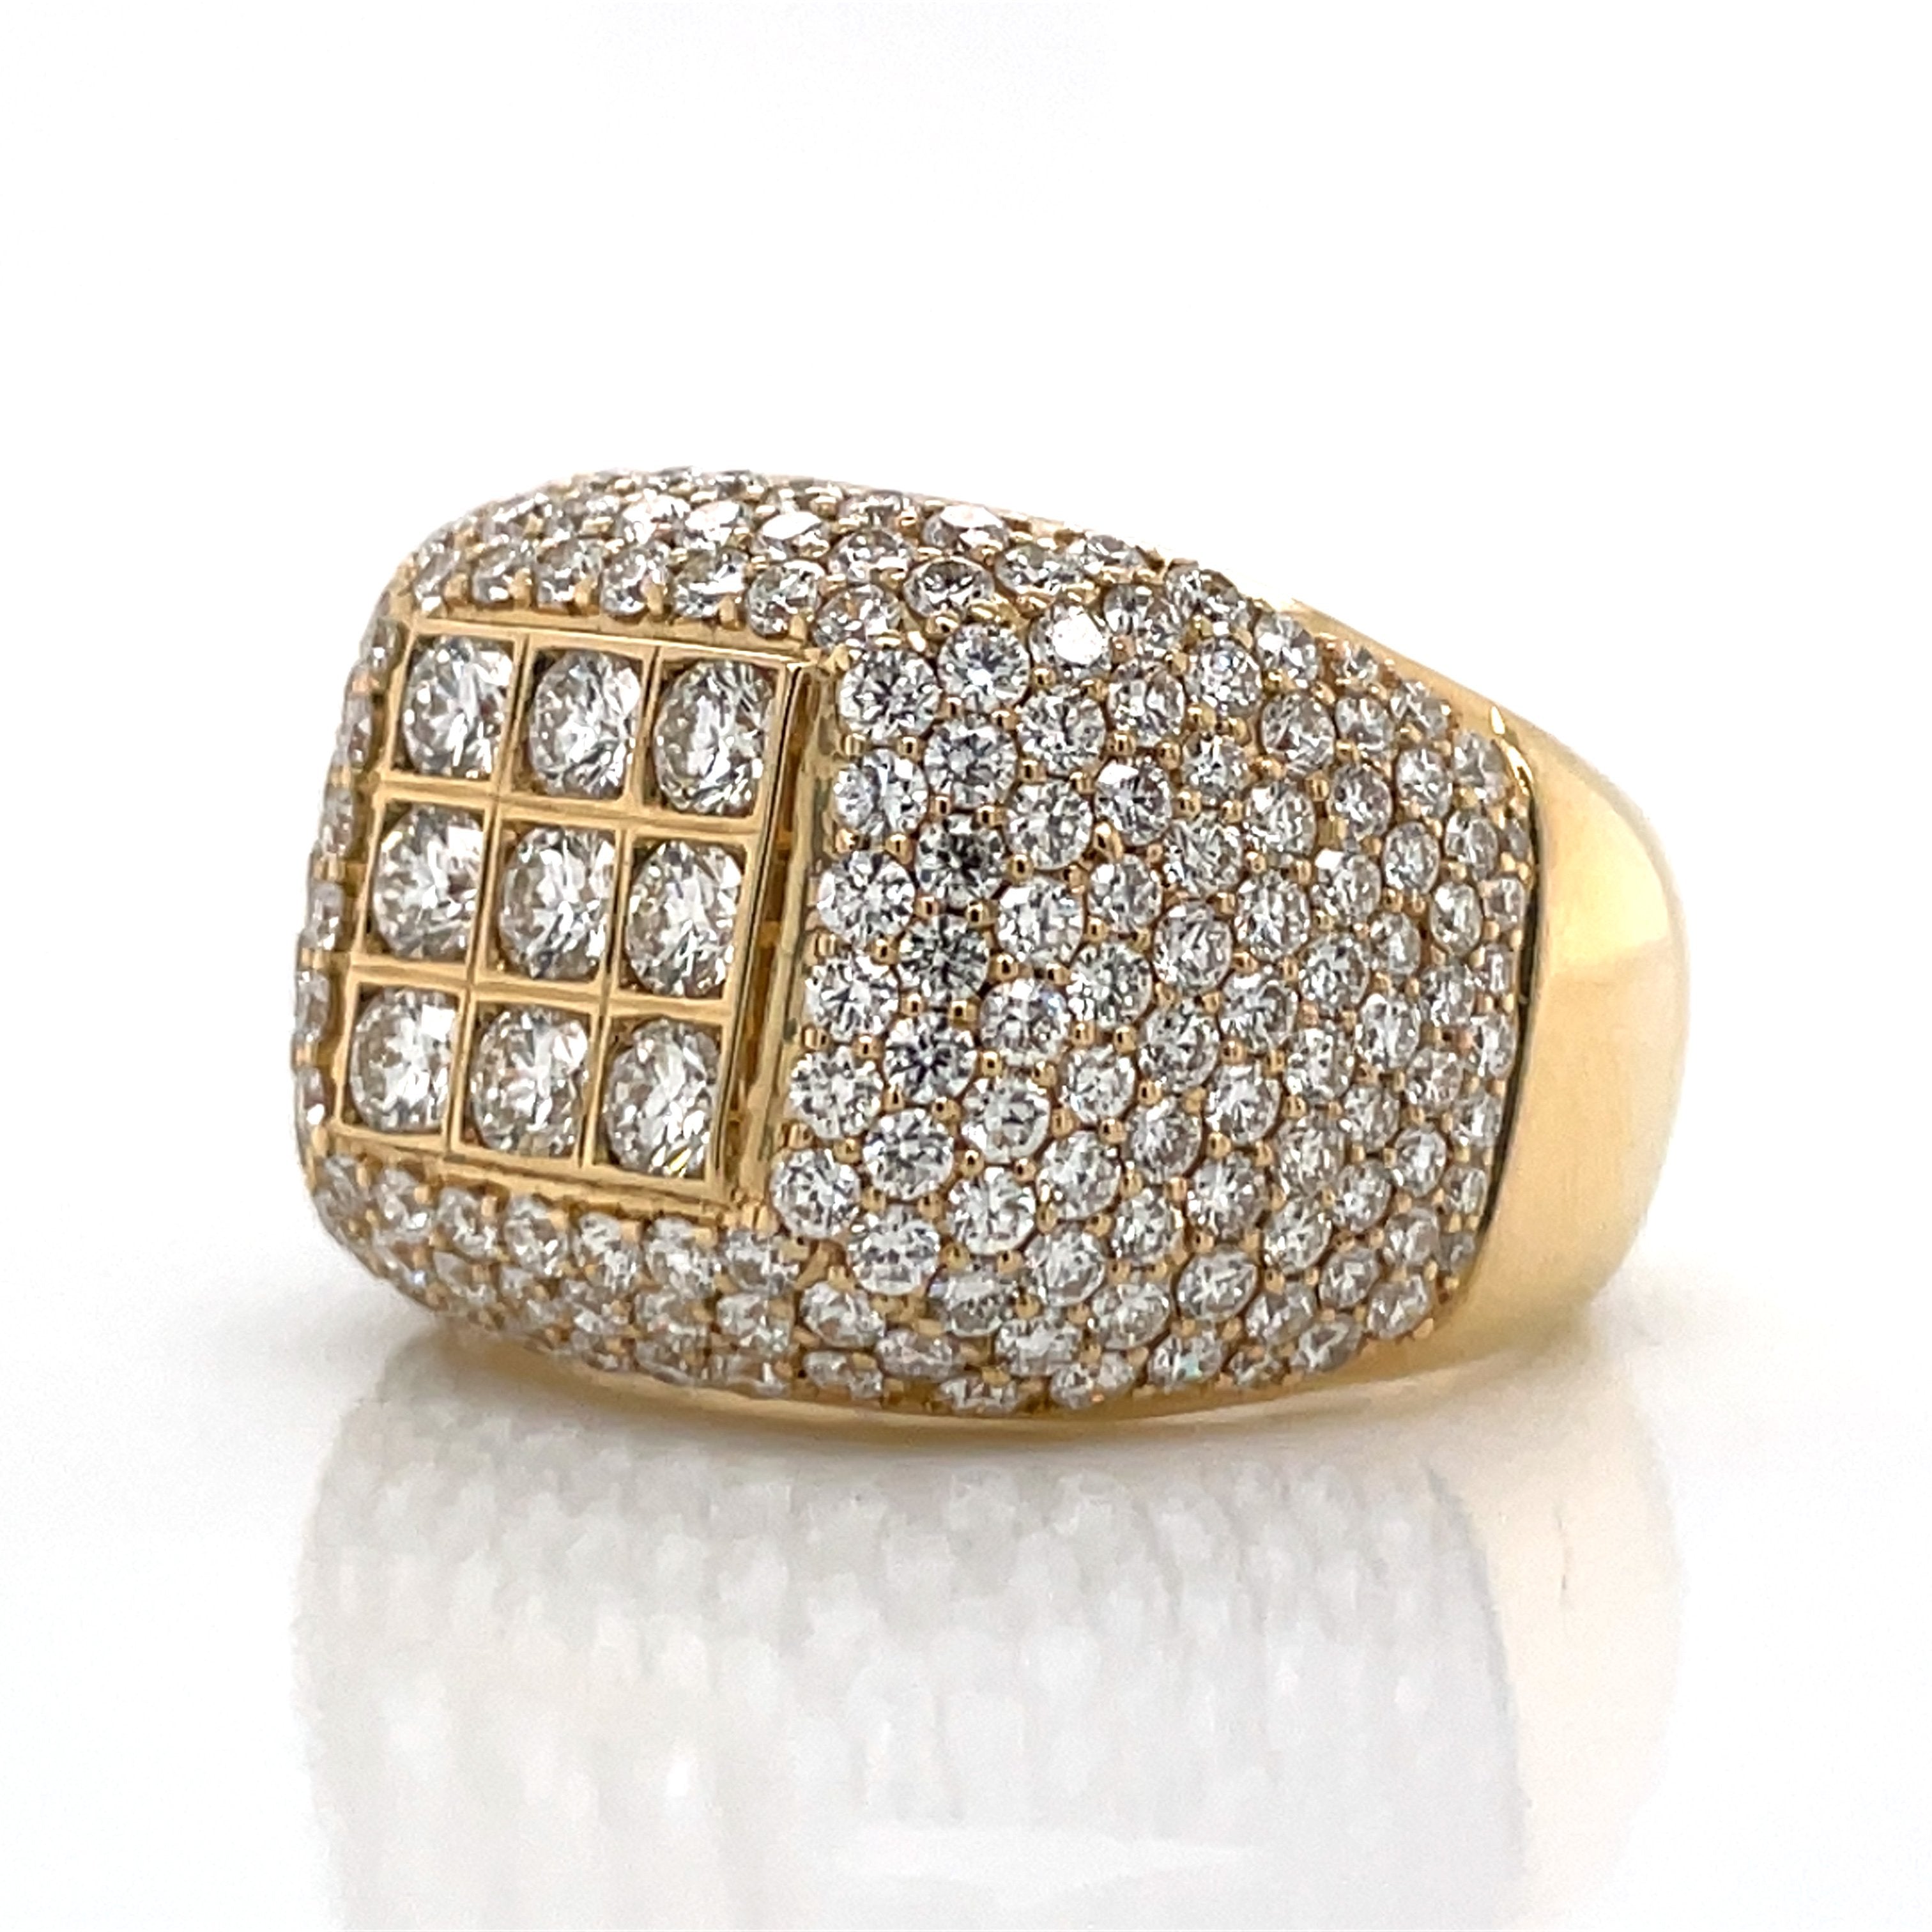 4.50 CT. Diamond 14K Gold Ring - White Carat Diamonds 